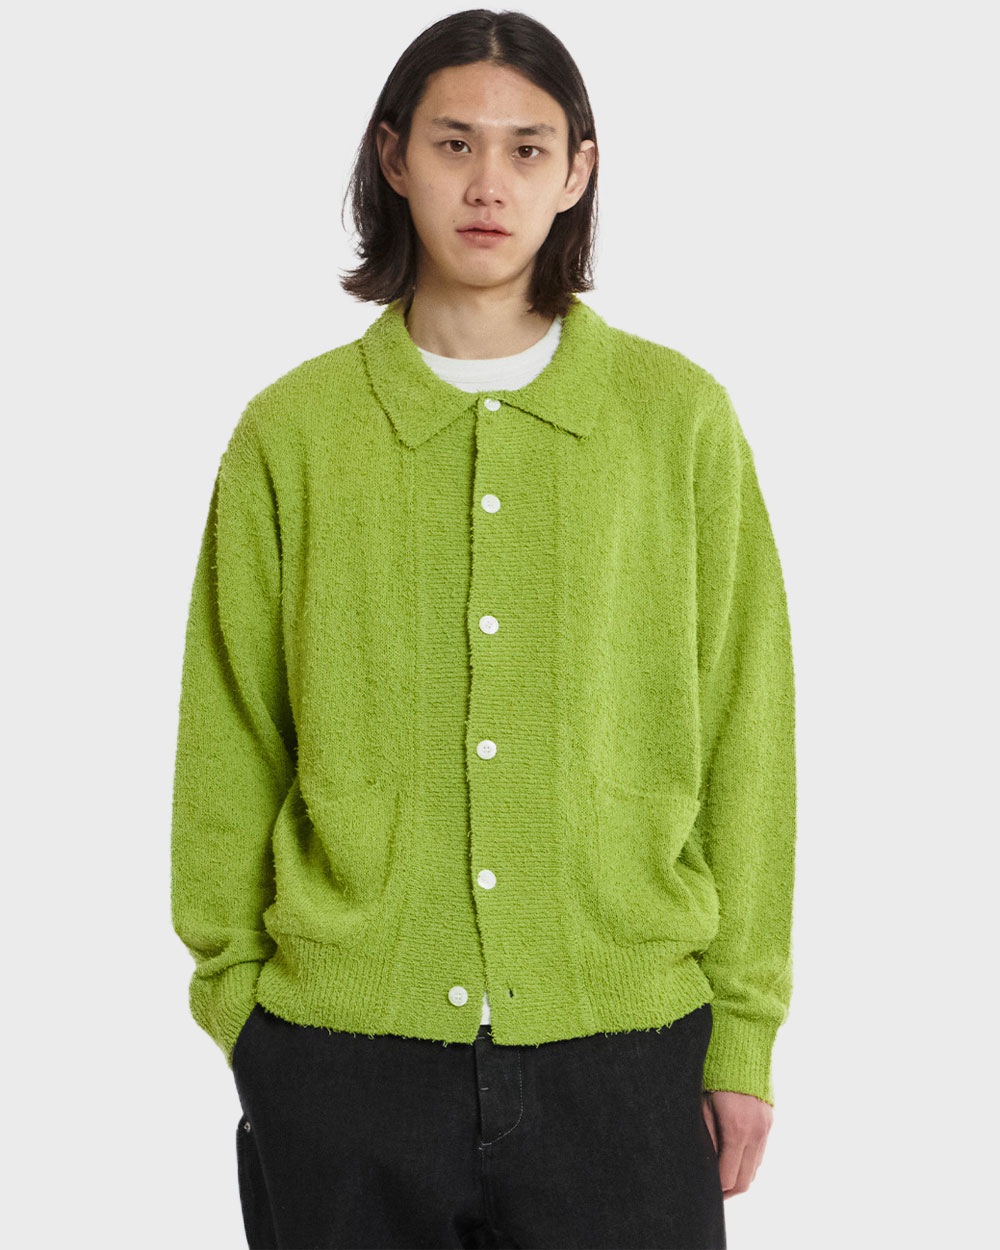 Boucle Shirt Cardigan (Lime)